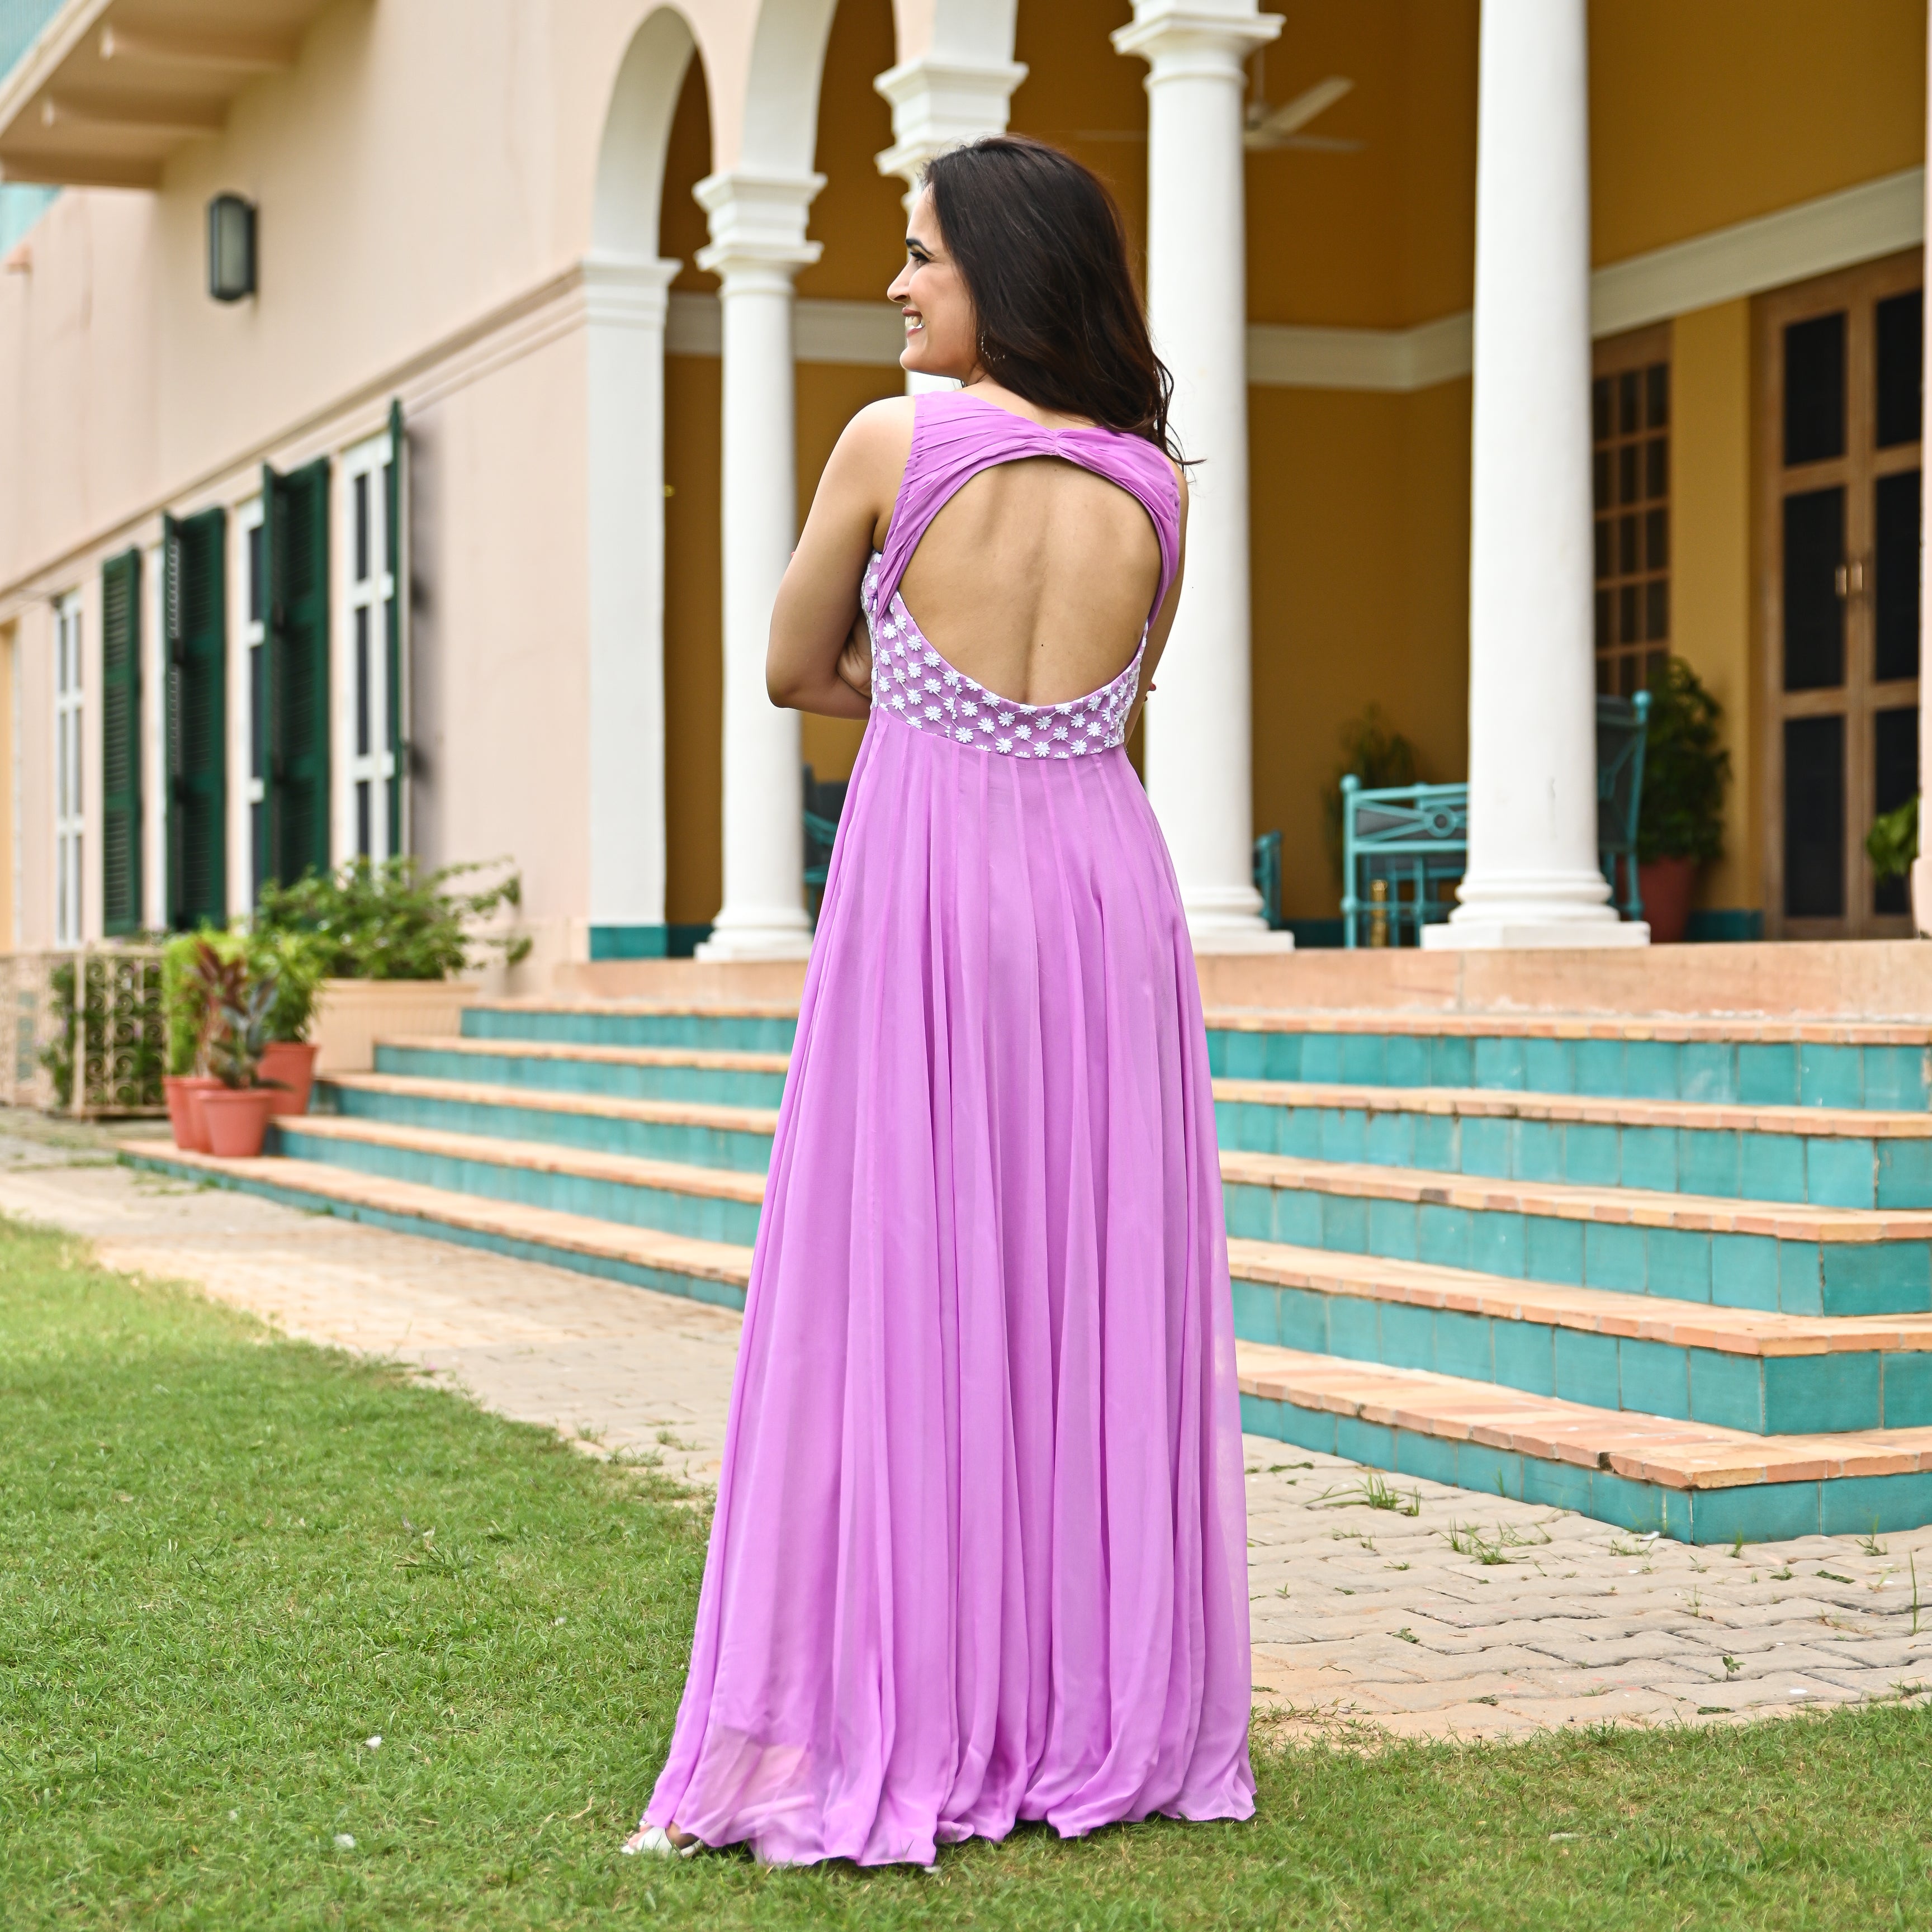 Ethnic Style Long Purple Gown Design For Girls – Kaleendi